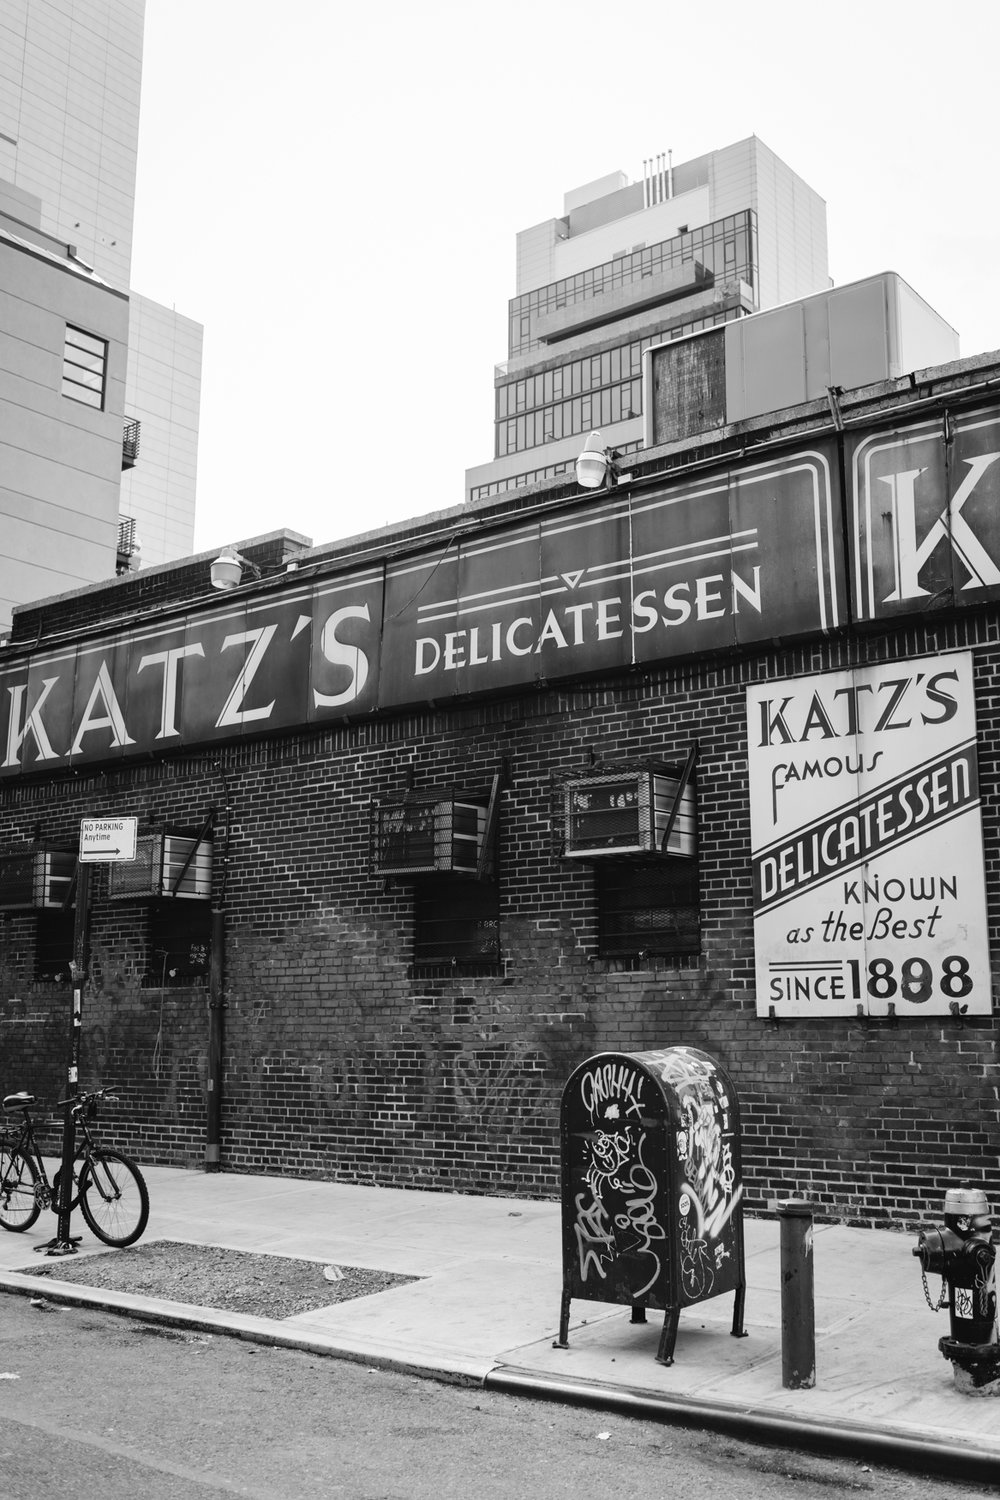  Katz's 